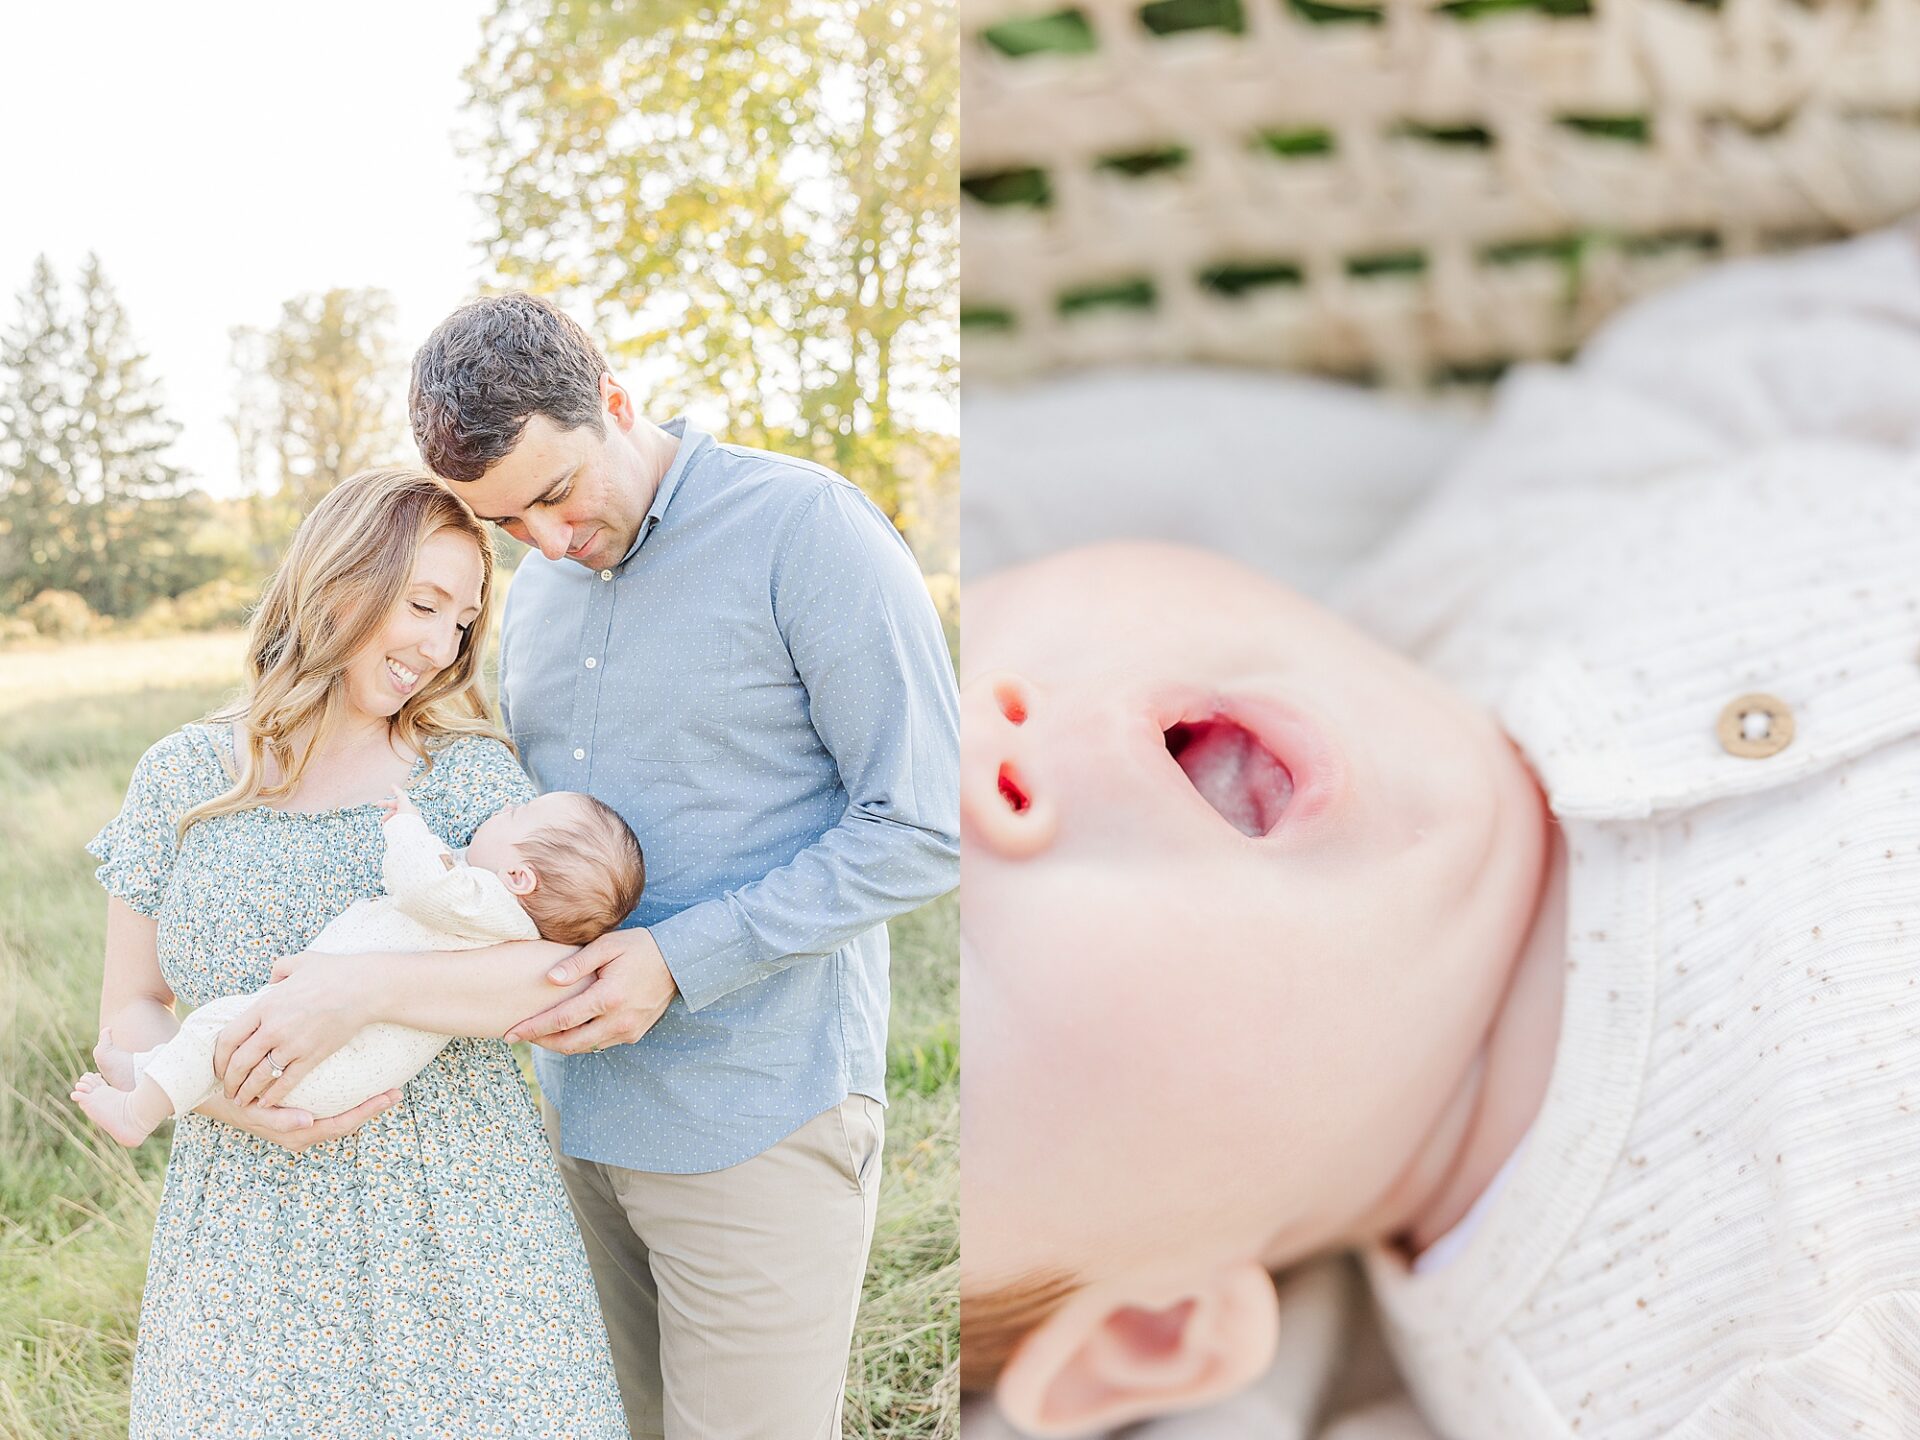 Fall outdoor newborn photo session in Wayland Massachusetts with Sara Sniderman Photography